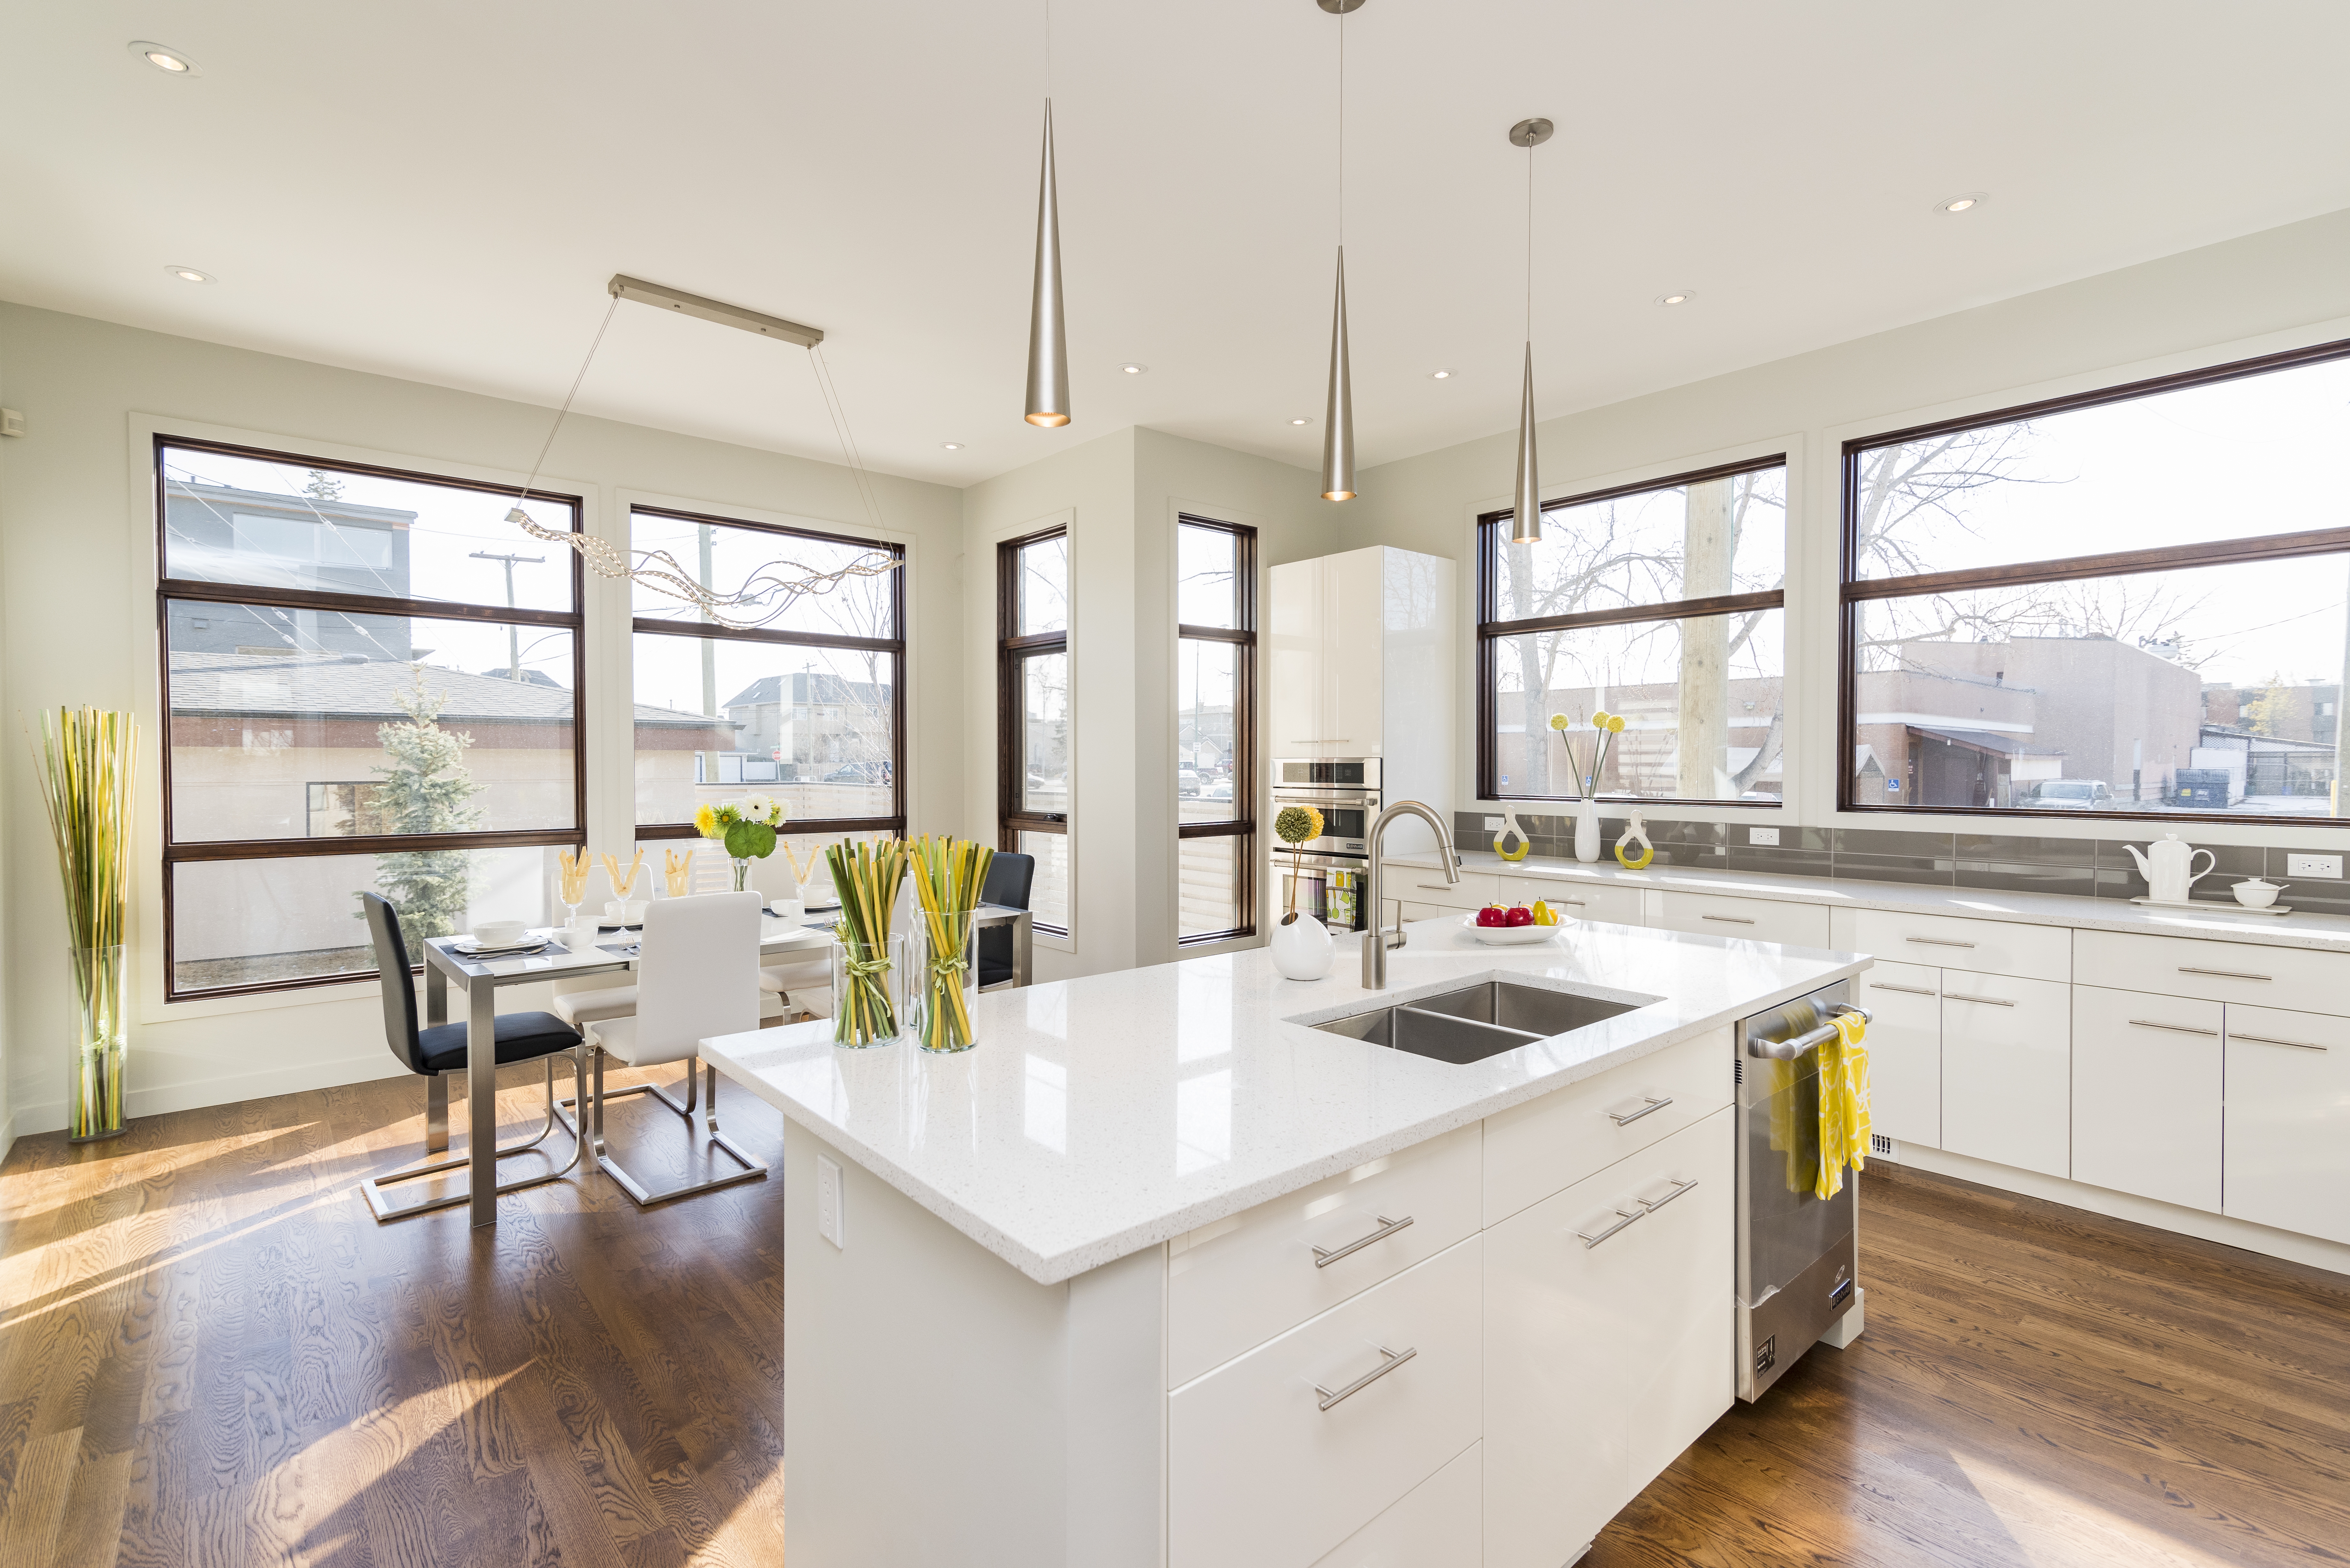 interior-shot-modern-house-kitchen-with-large-windows.jpg